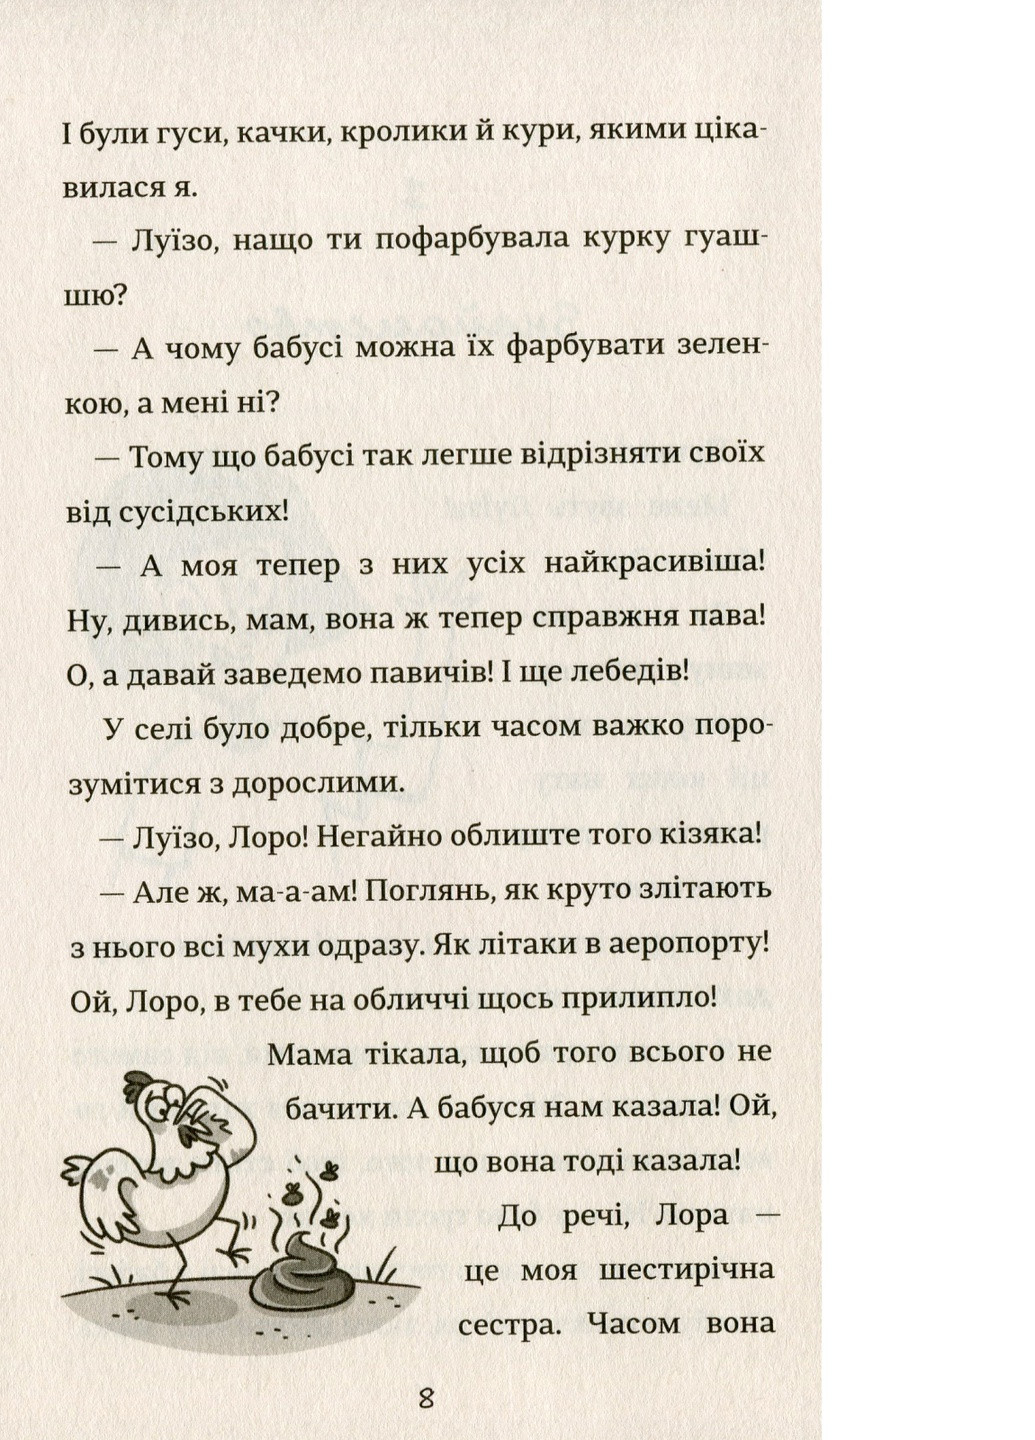 Книга Лу-ветеринарка - Аліна Штефан (9786177820900) Книголав (258357270)